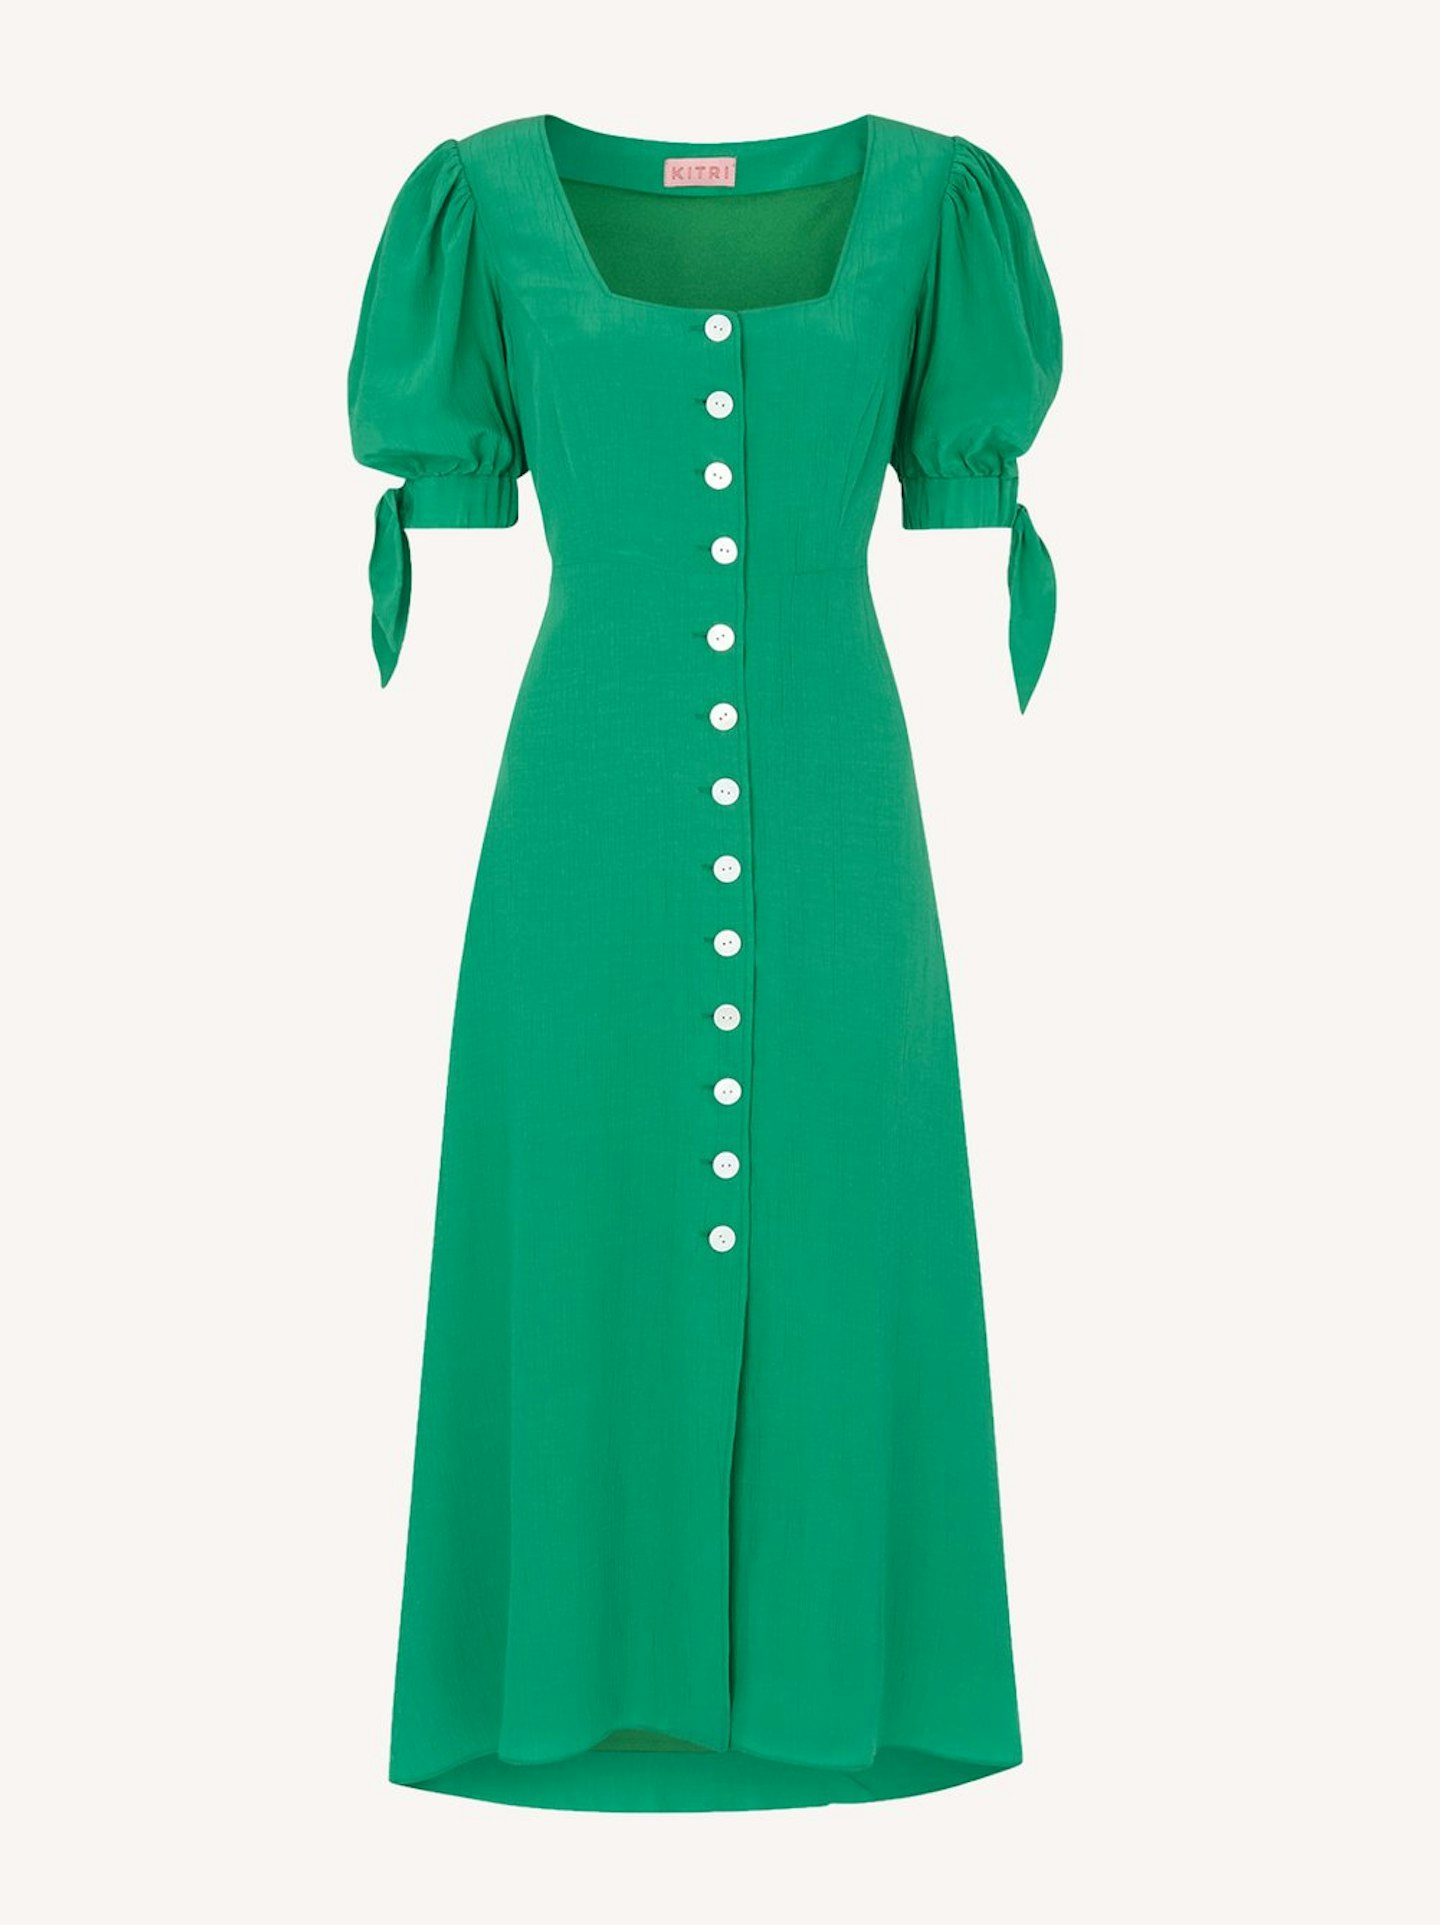 Lenora Green Midi Dress, £125